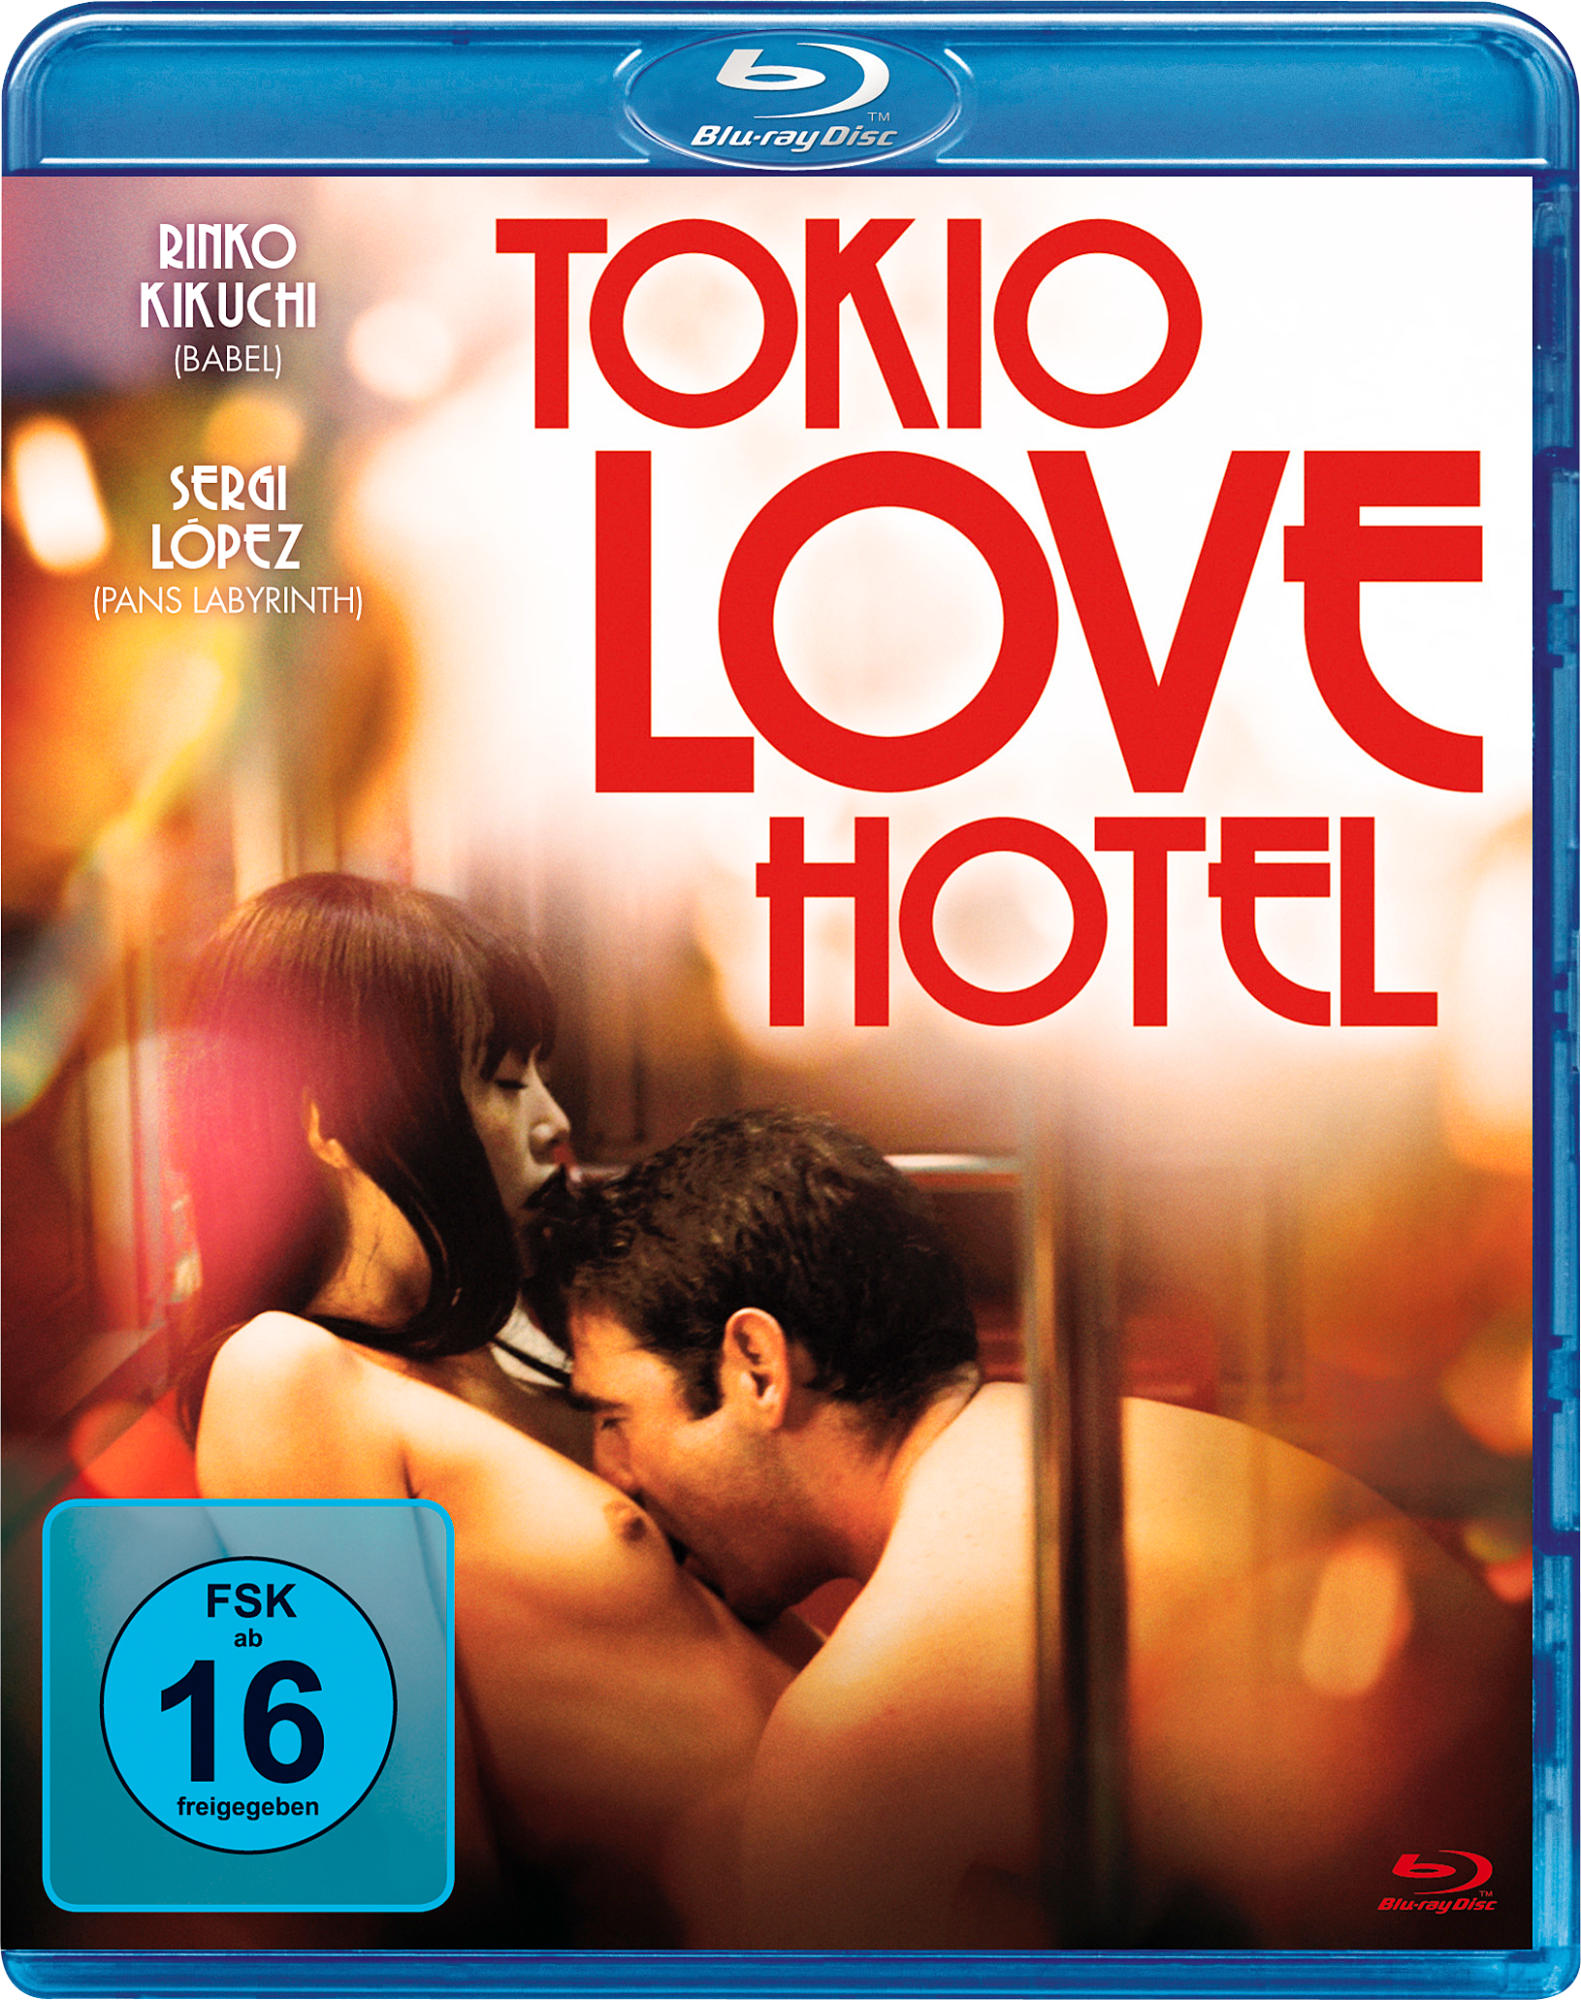 Hotel Blu-ray Tokio Love